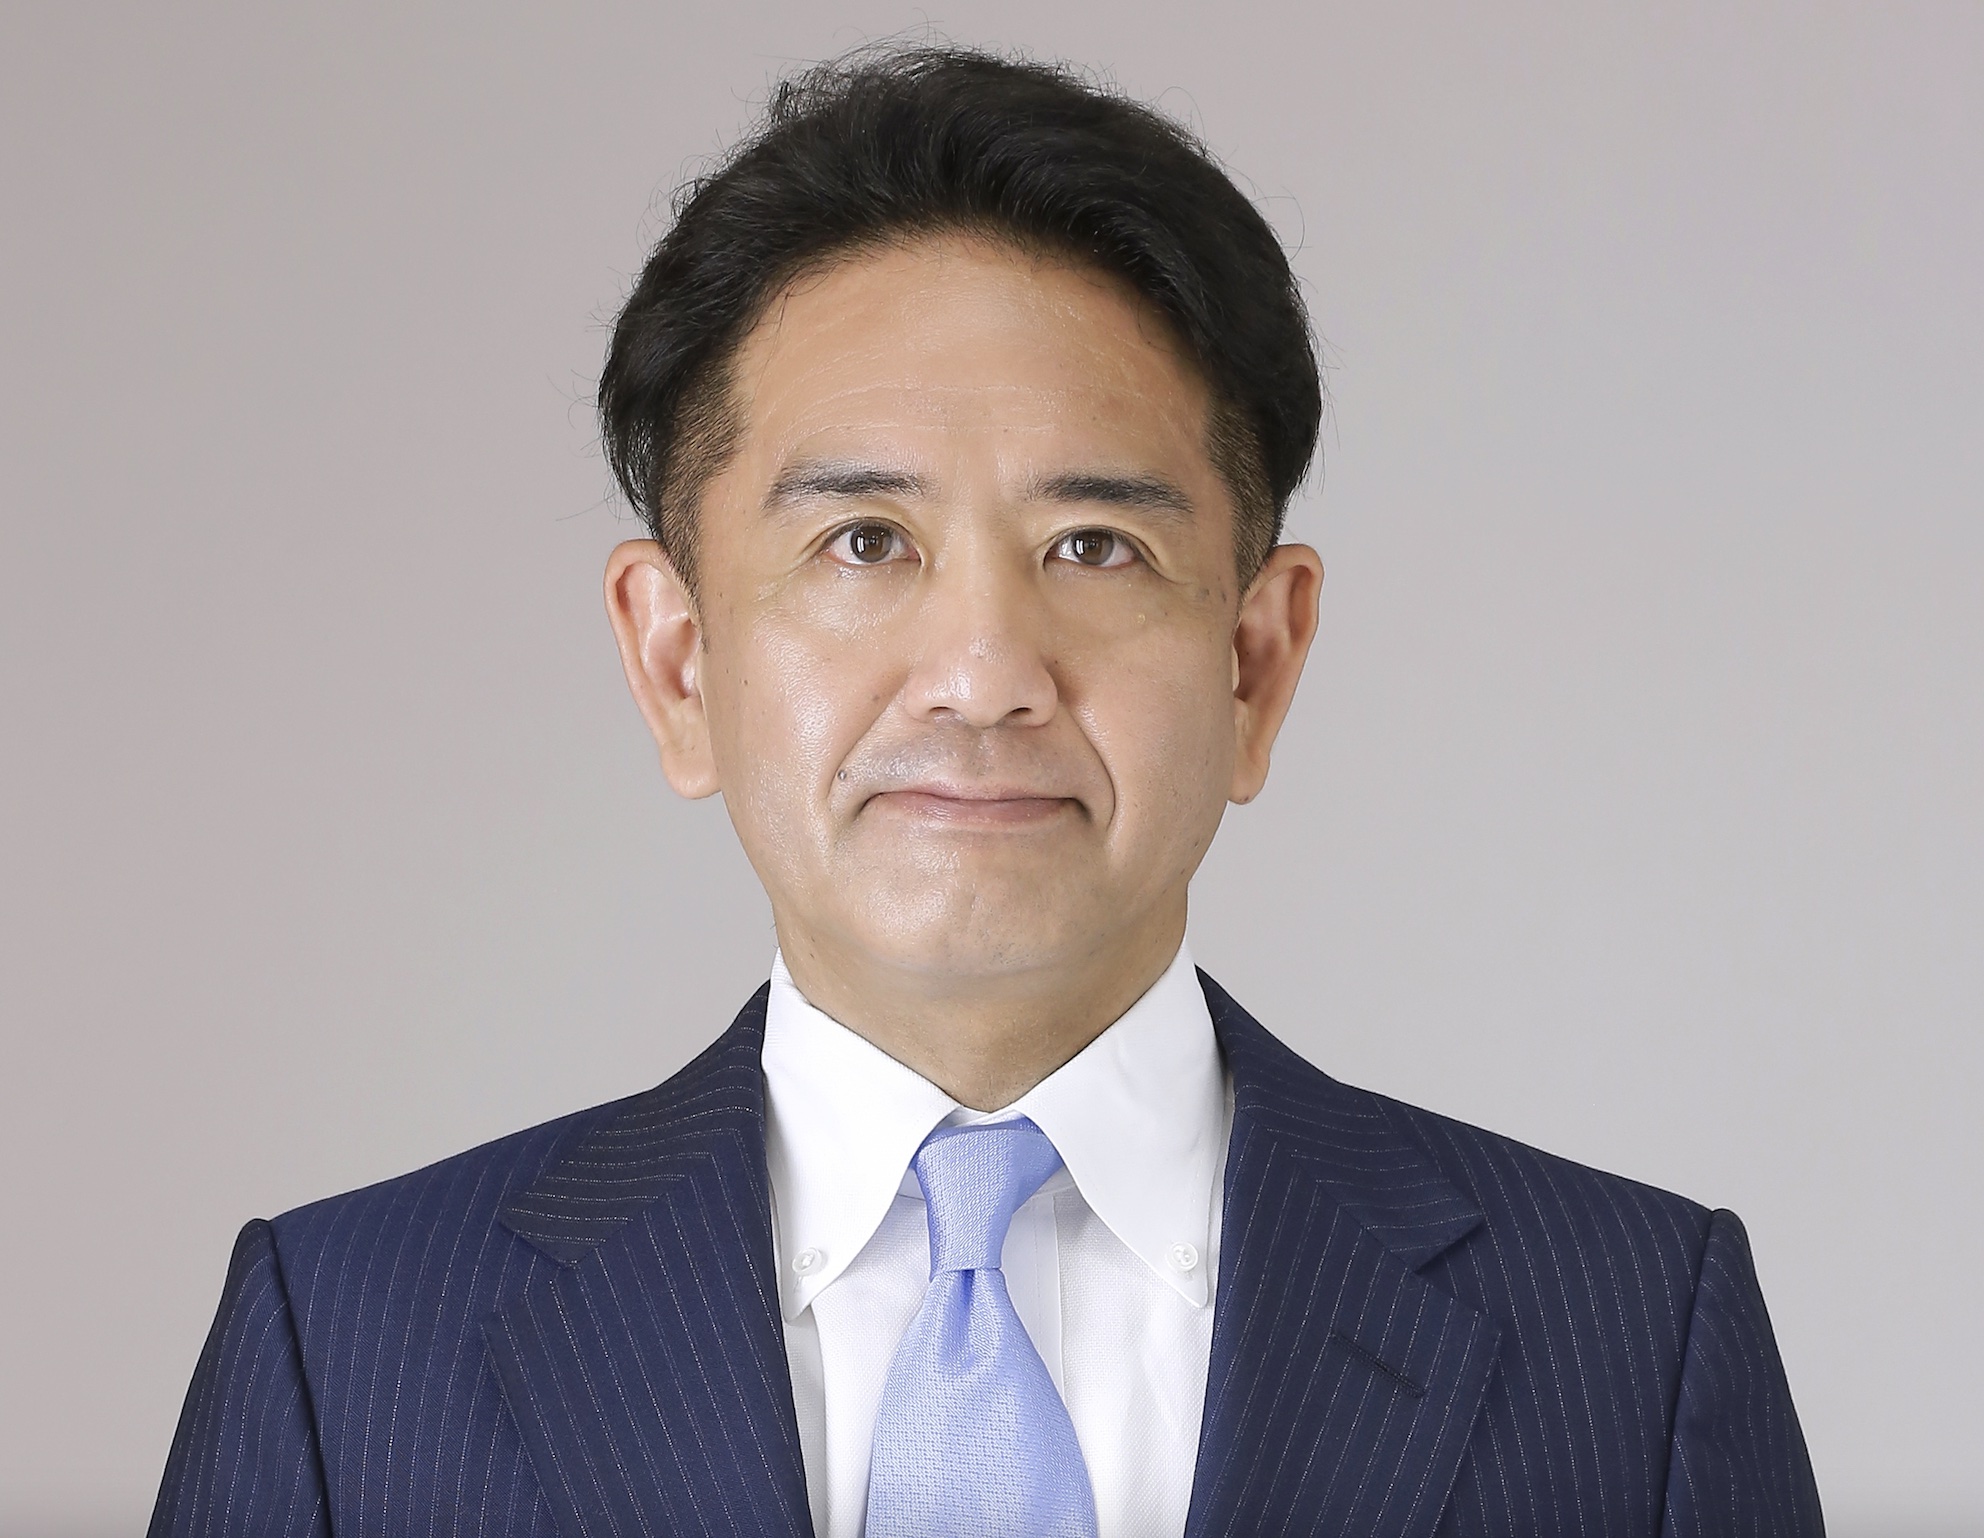 Tadashi Kiriya - General Manager at Ultragenyx Japan